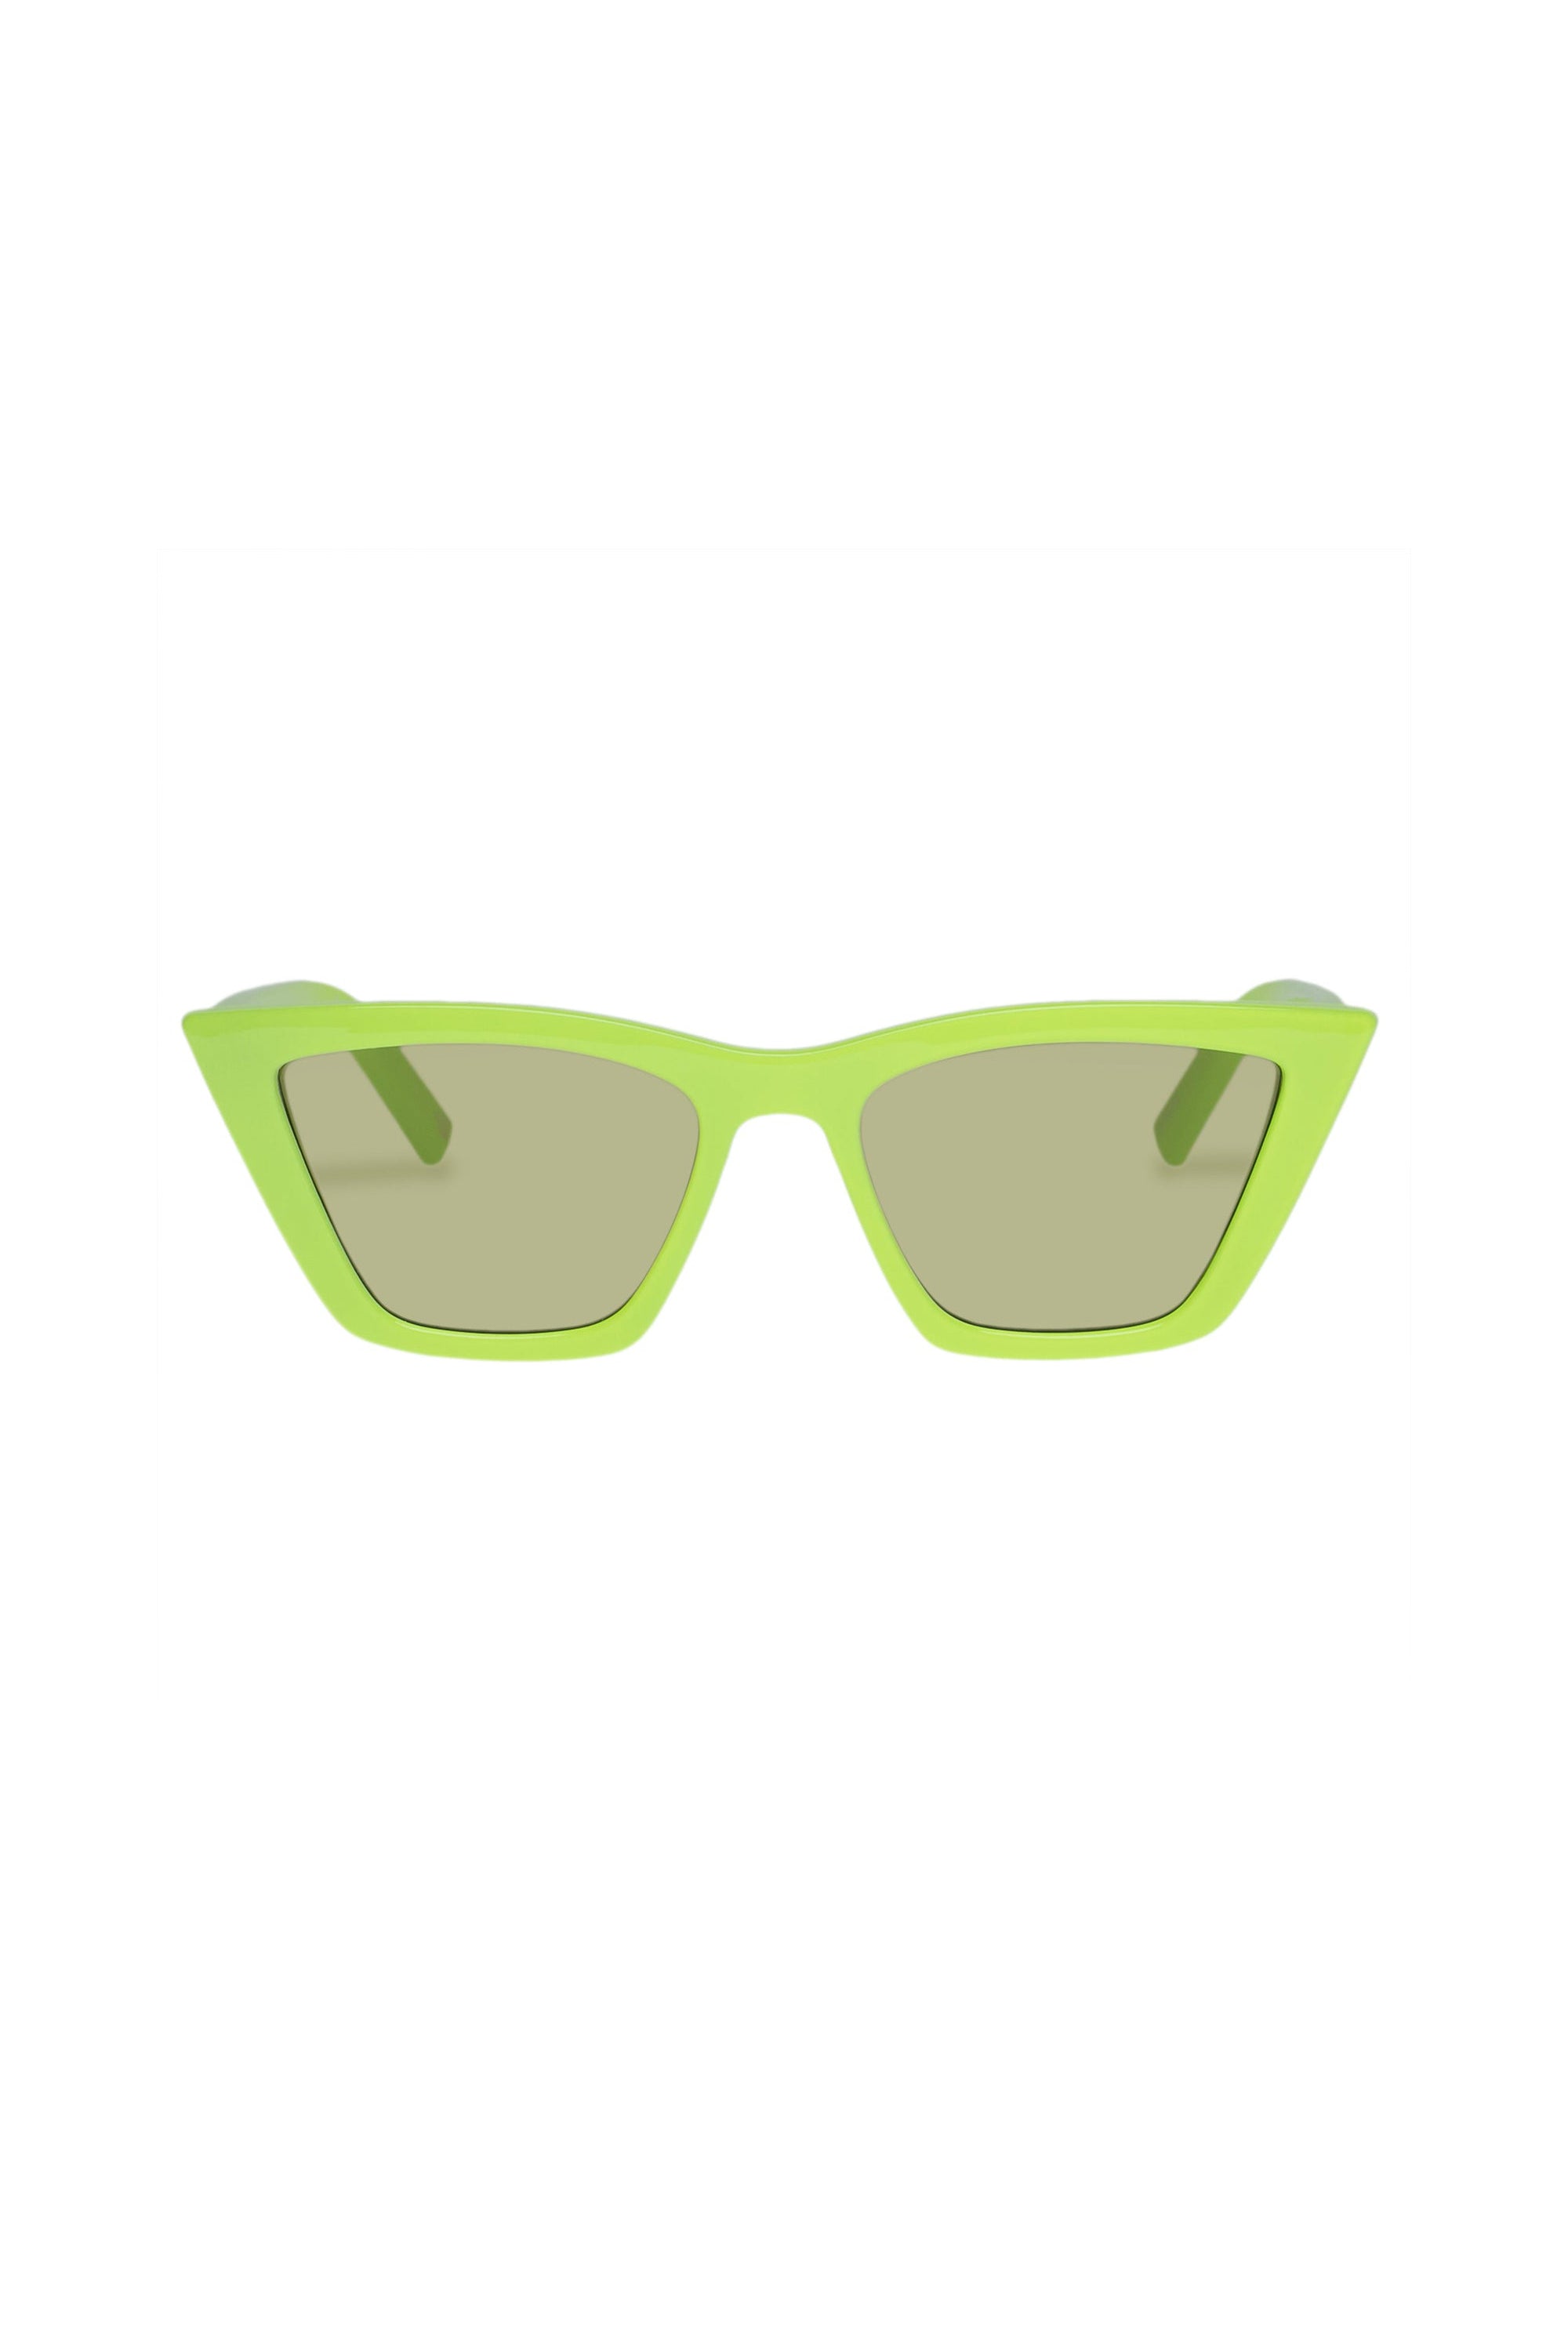 Le Specs Velodrome Sunglasses - Pine Lime // LTD ED - RUM Amsterdam